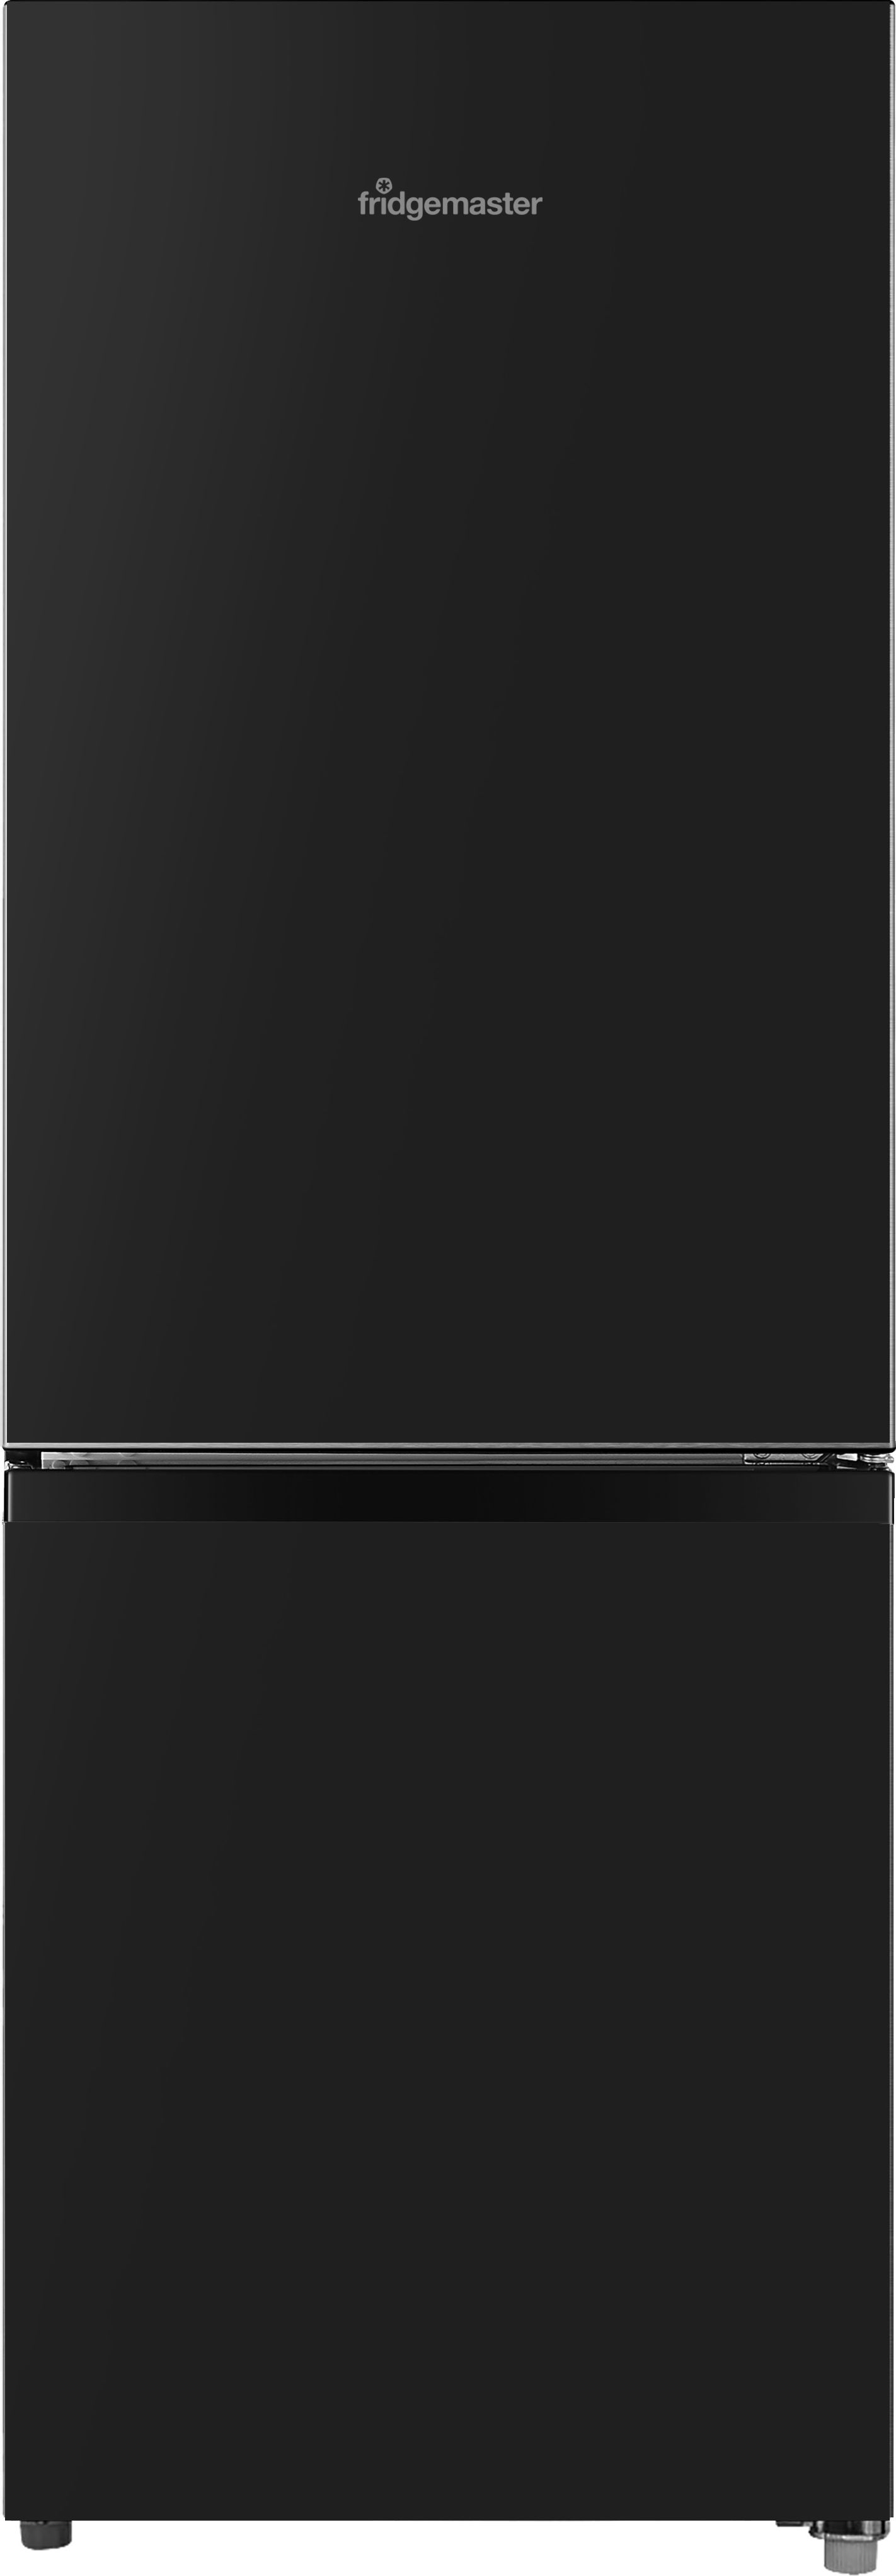 Fridgemaster MC50165EB Compact 143cm High Fridge Freezer - Black - E Rated, Black